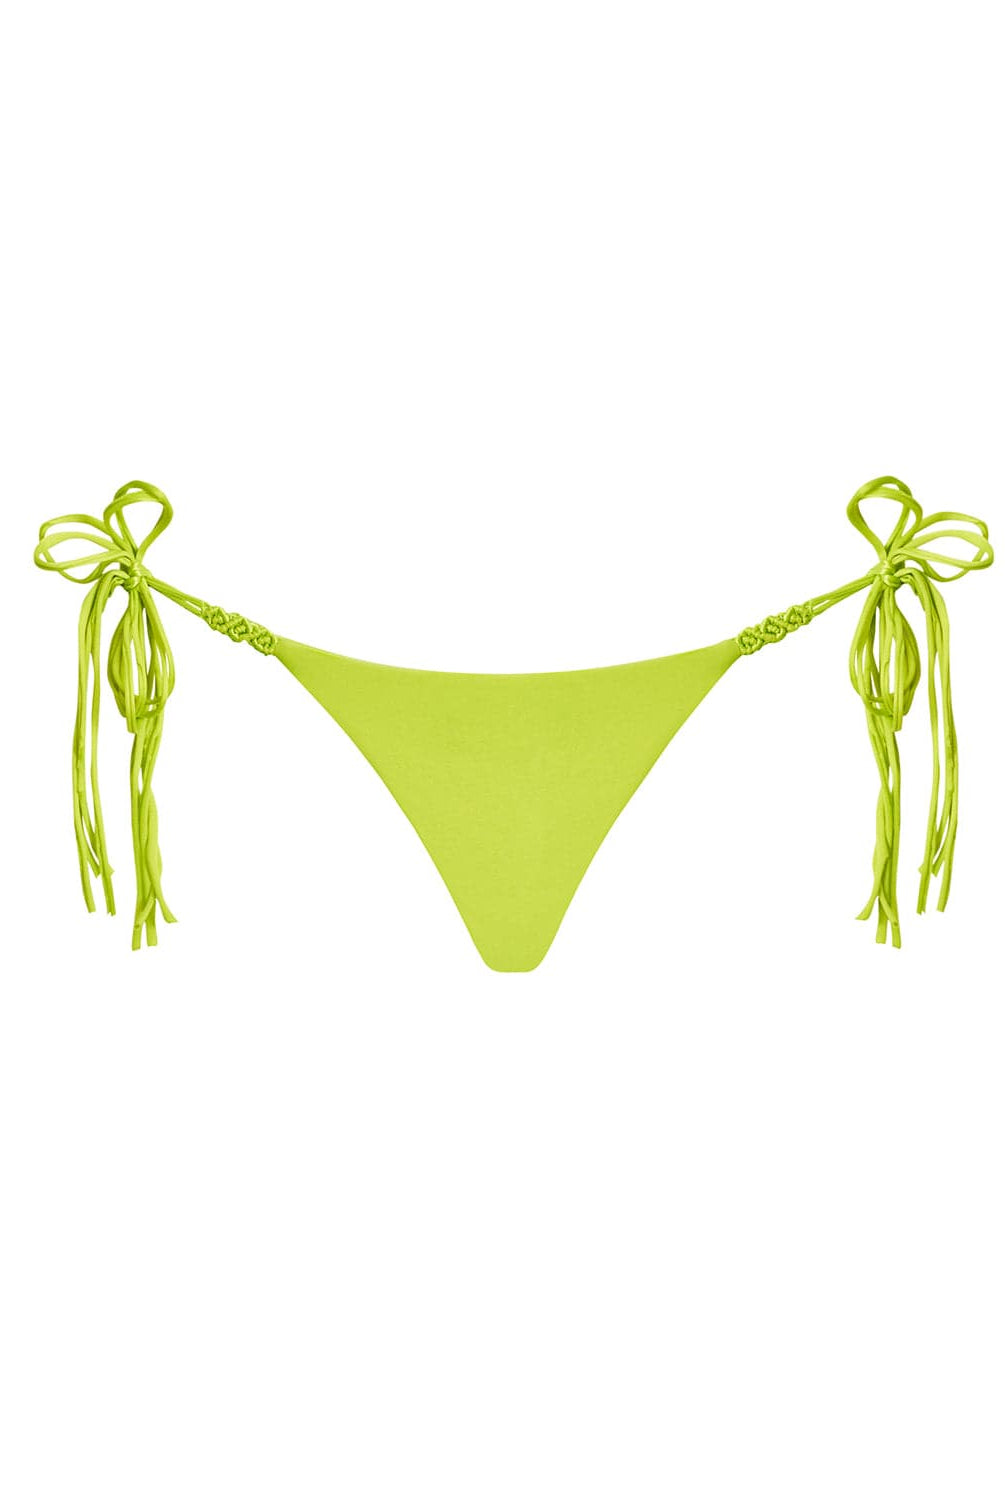 A lime macrame tie side bikini bottom. Featured against a white wall background.